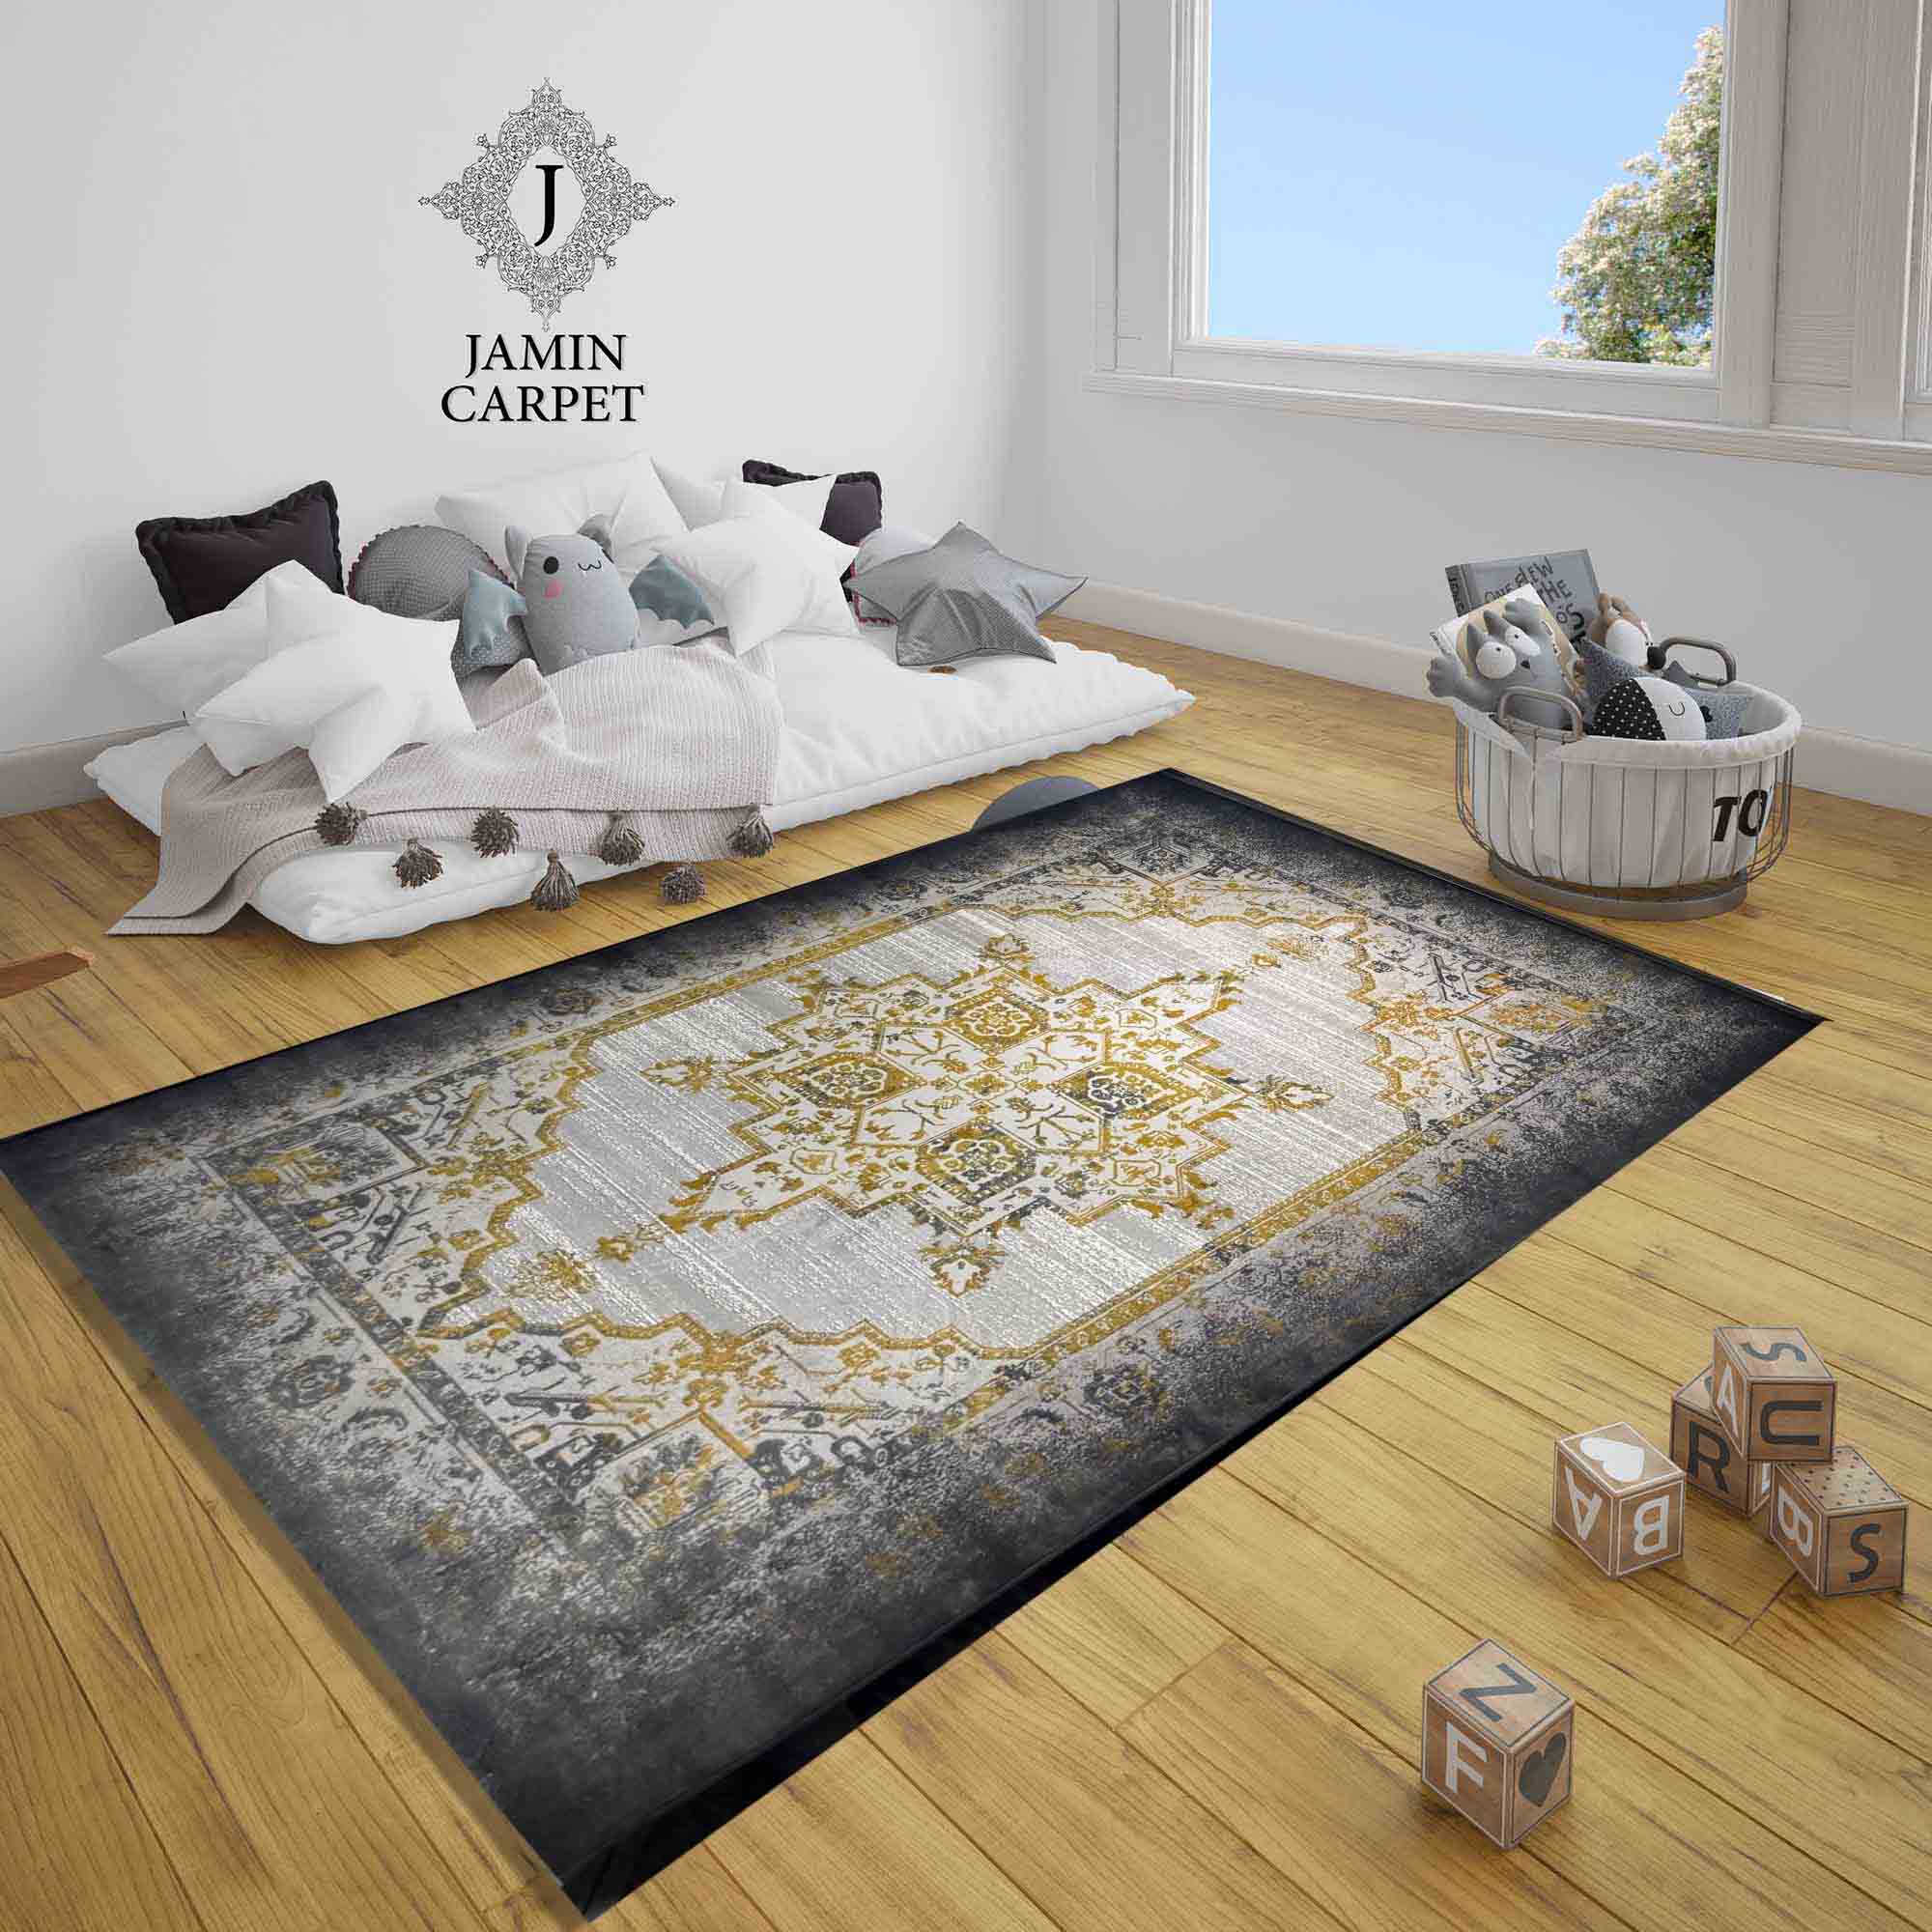 Fantasy carpet, code 249, comb 400, density 1800, all acrylic